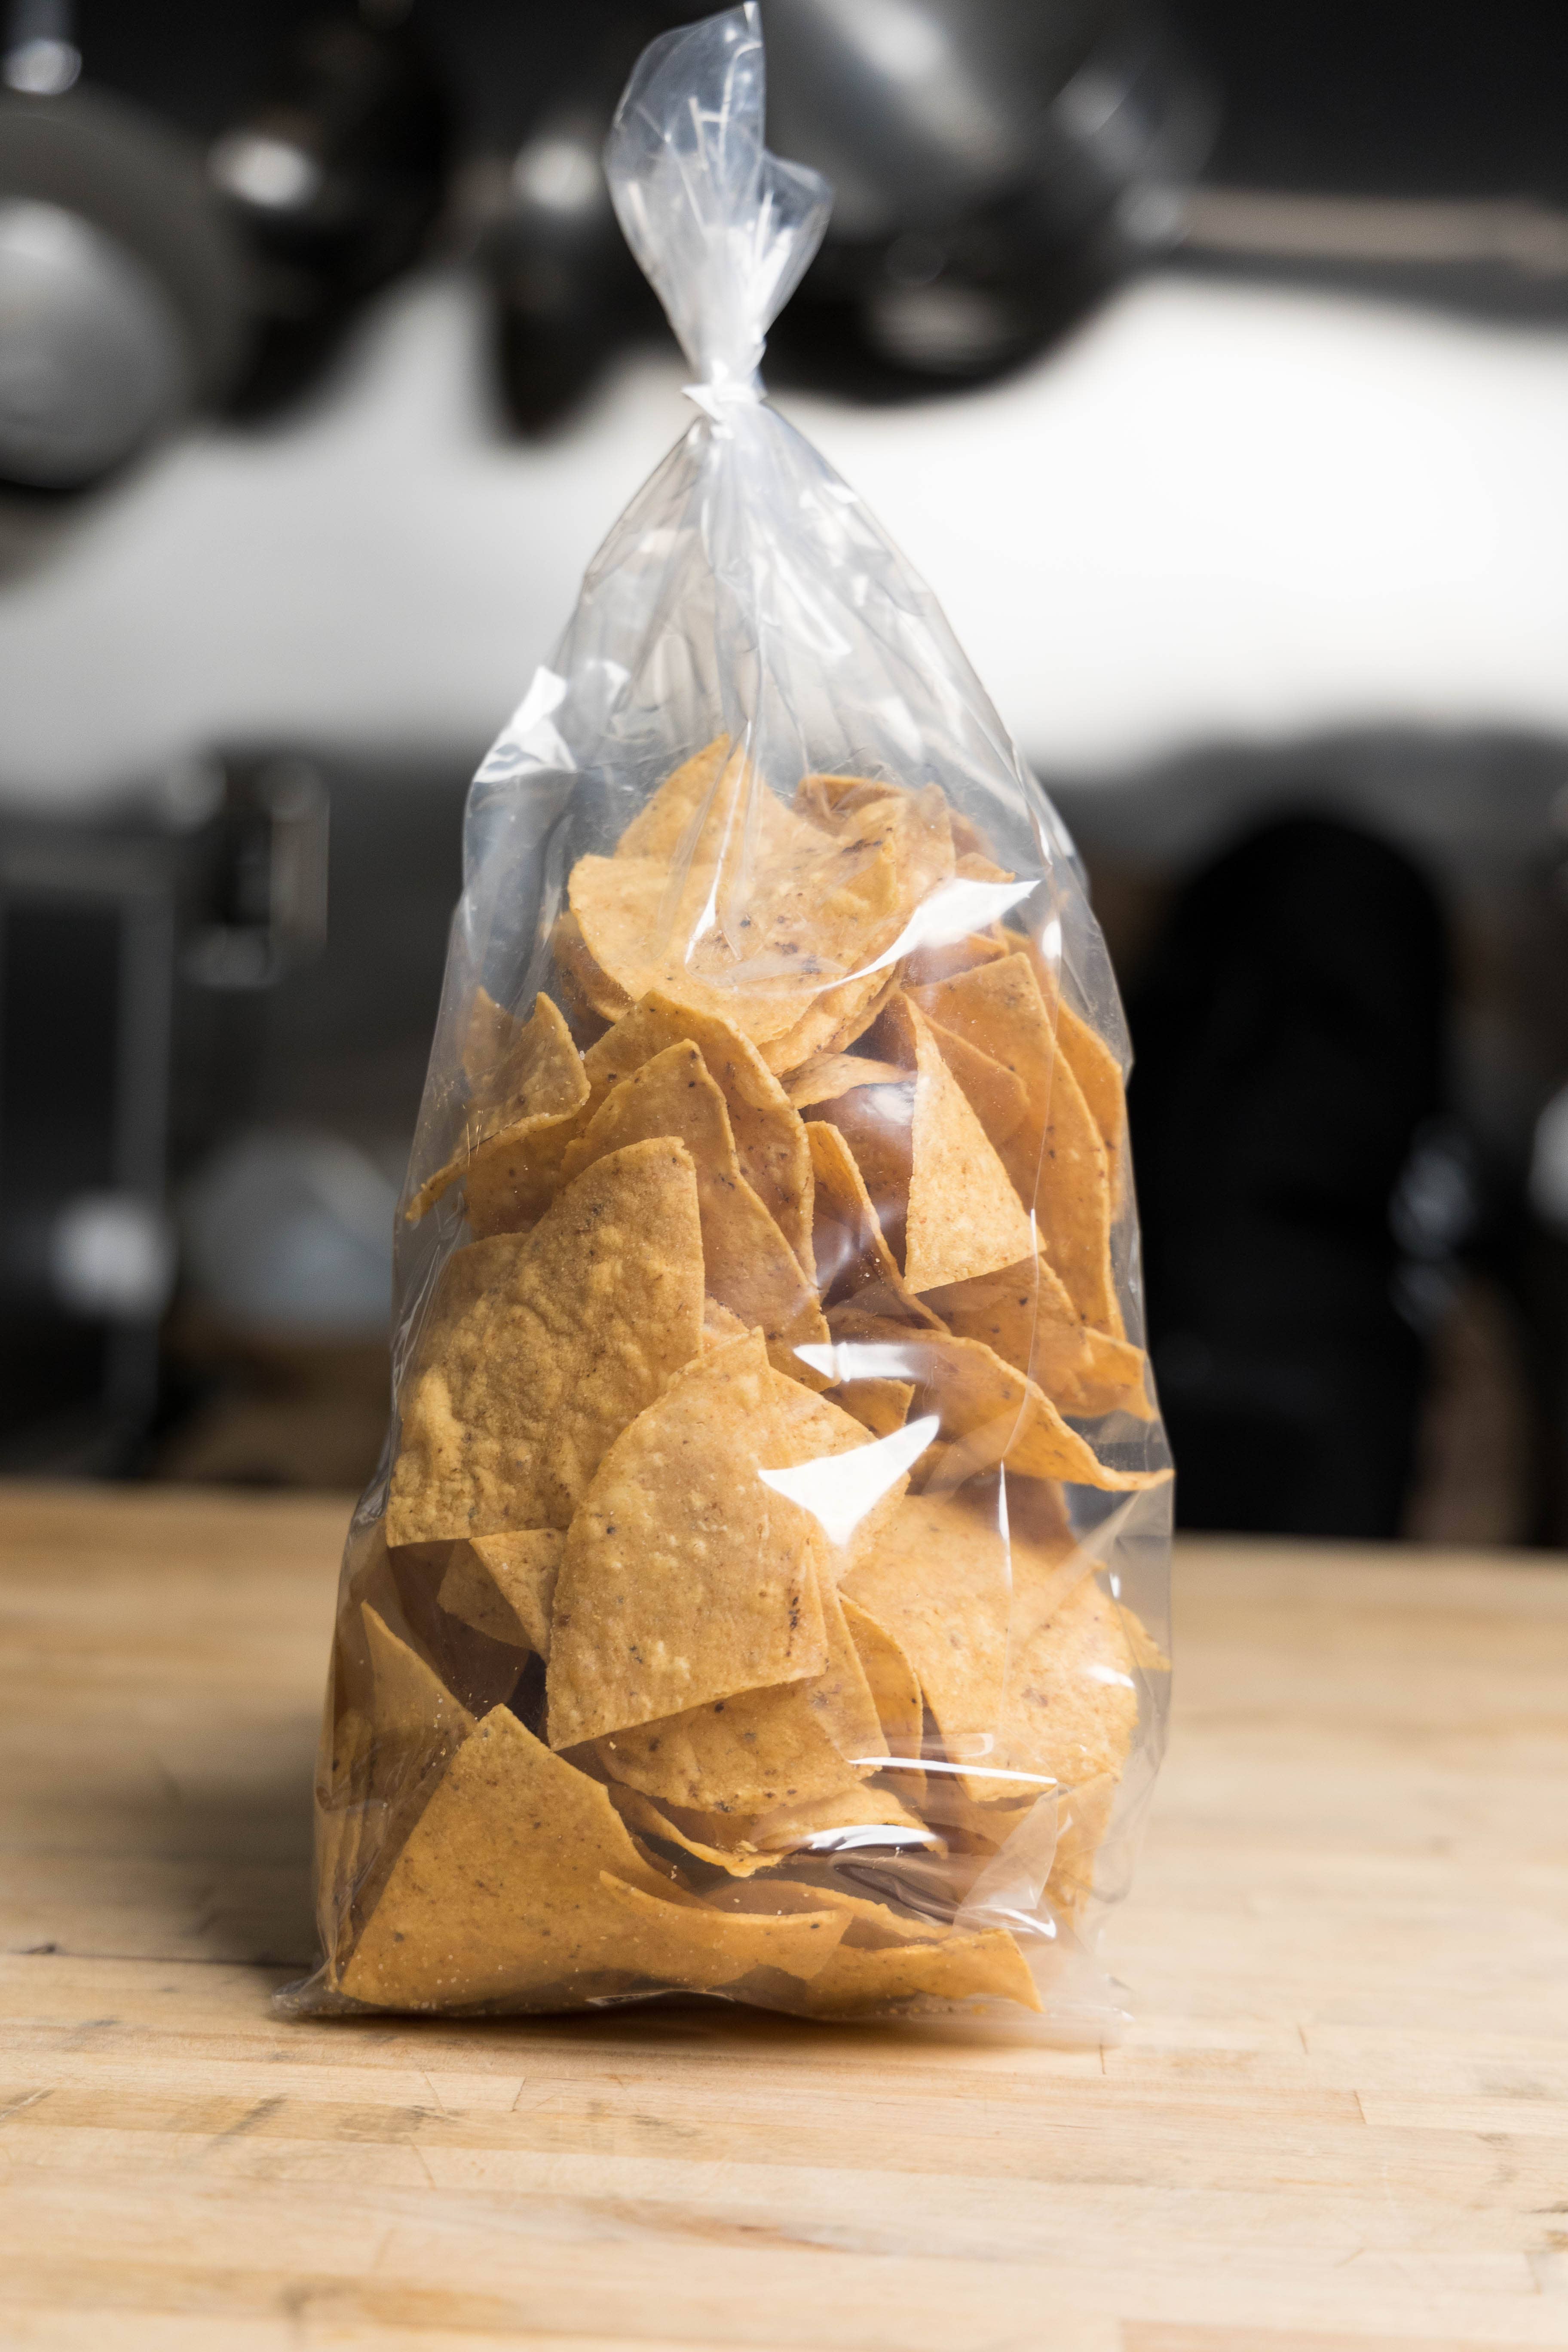 Wholesale White Corn Tortilla Chips (12oz) for your store - Faire